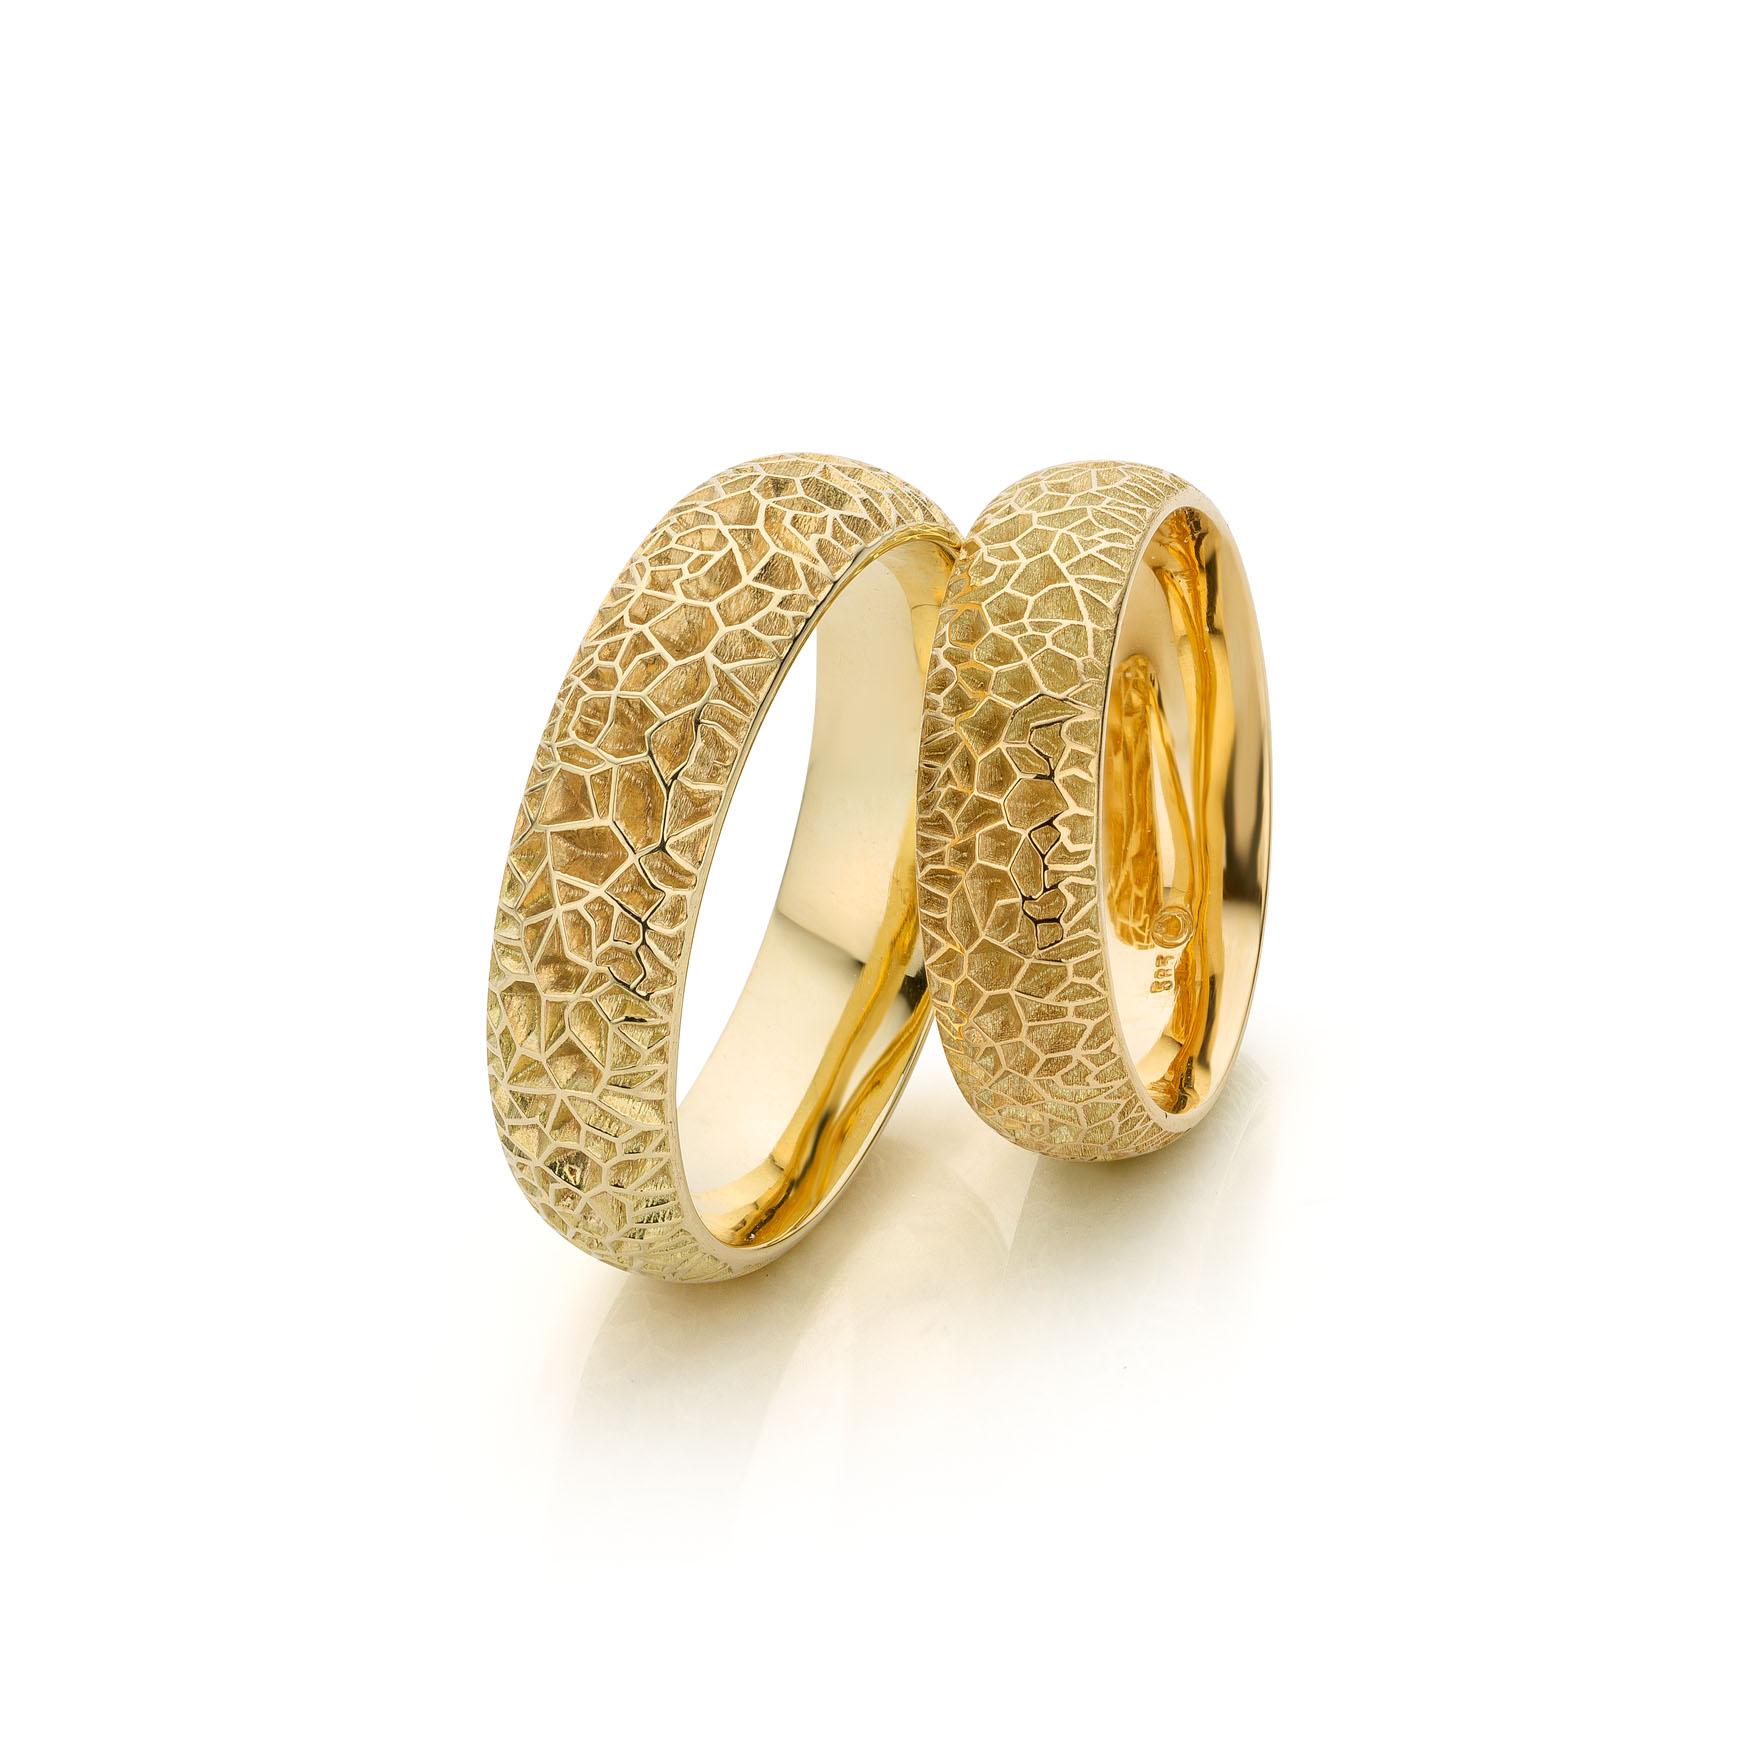 For Sale:  Cober Jewellery “Desert Footsteps” 14 Karat Yellow Gold Wedding Rings 5